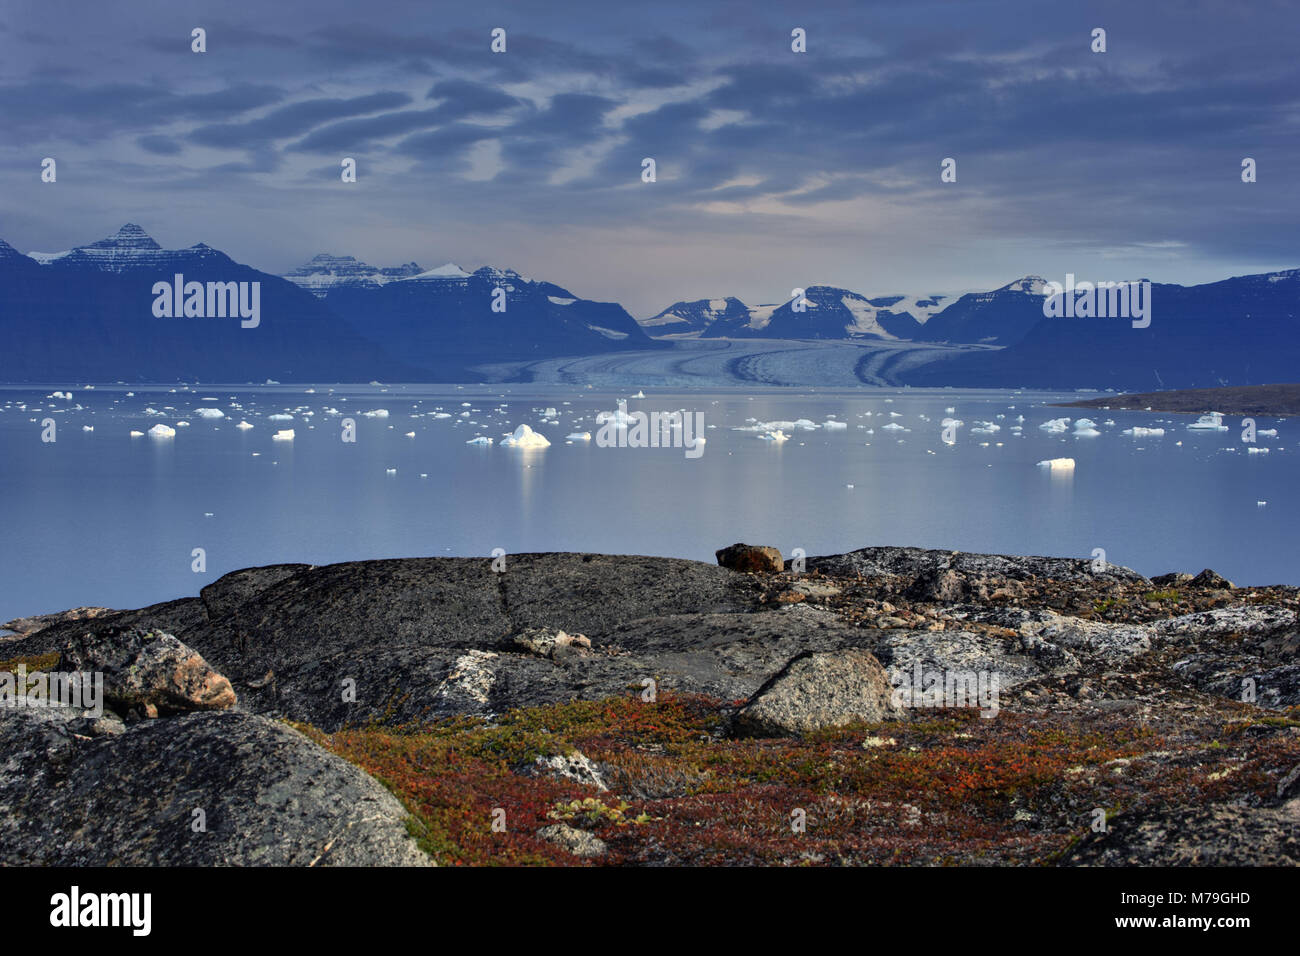 Greenland, East Greenland, Scoresby Sund, icebergs, coastal scenery, mountain landscape, glacier, Stock Photo